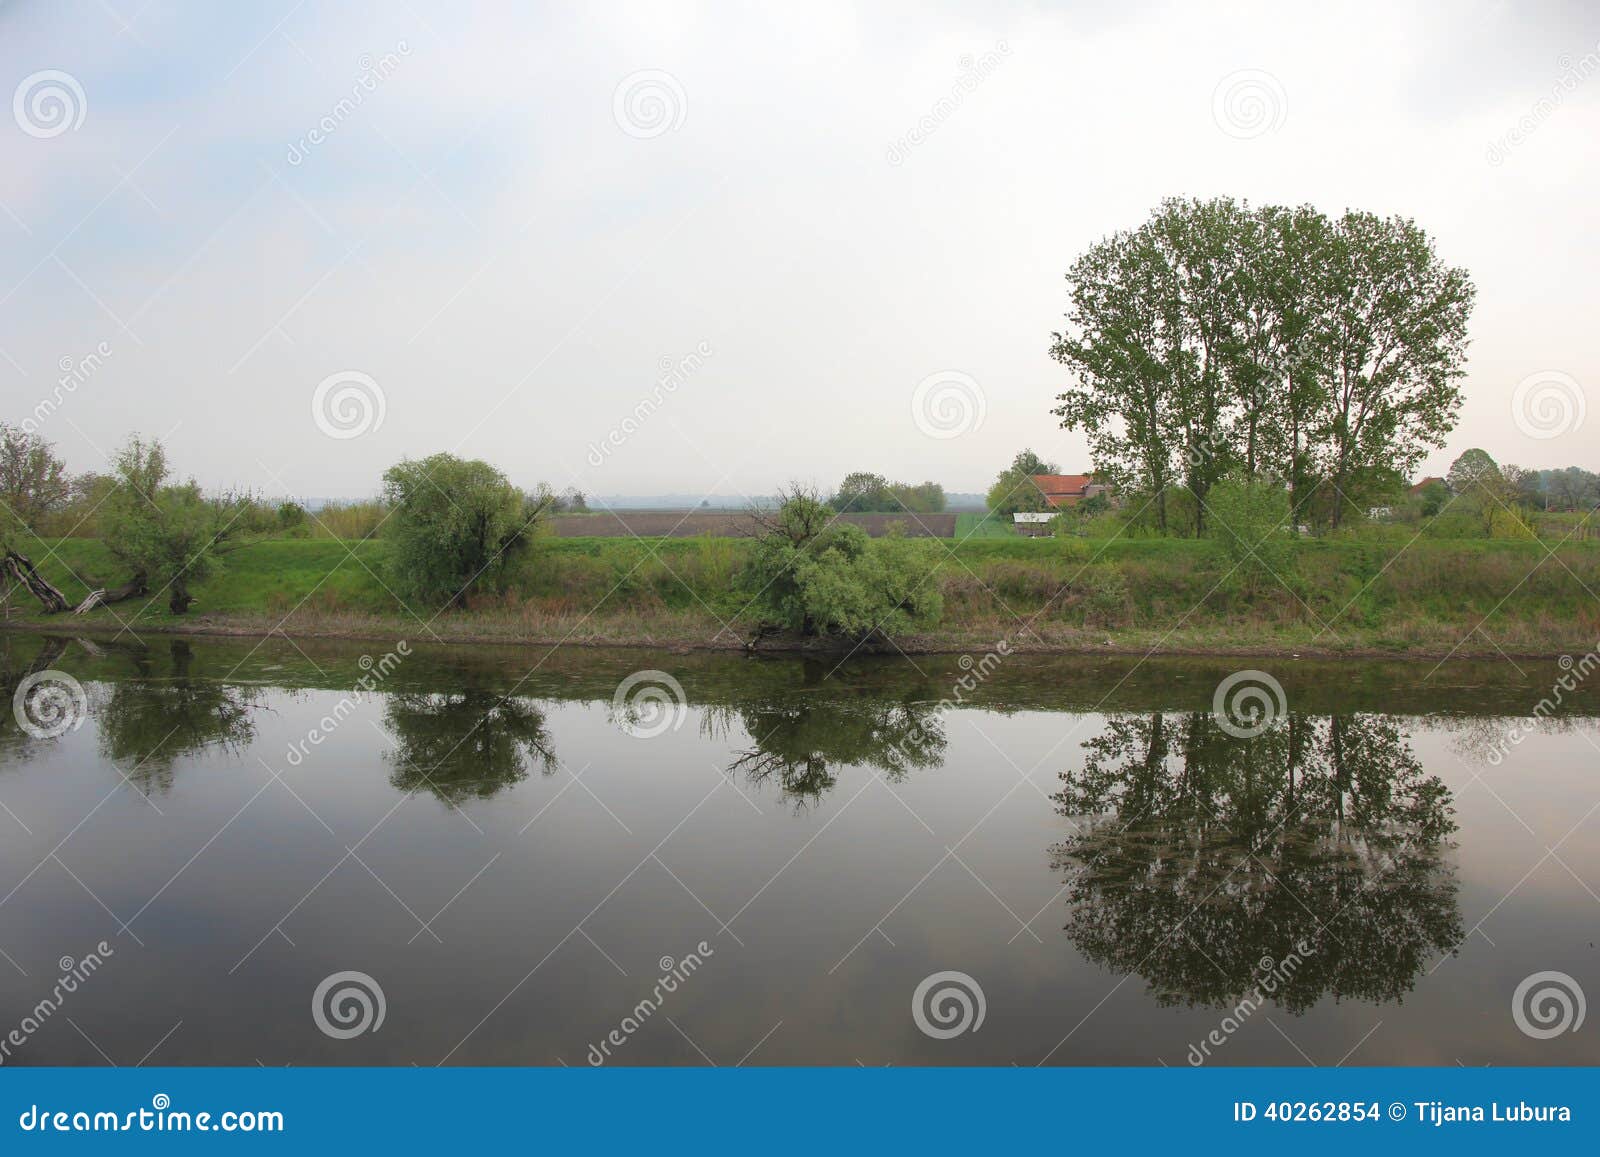 The river in Serbia, the village of Ivanovo, near Pancevo, Serbia.